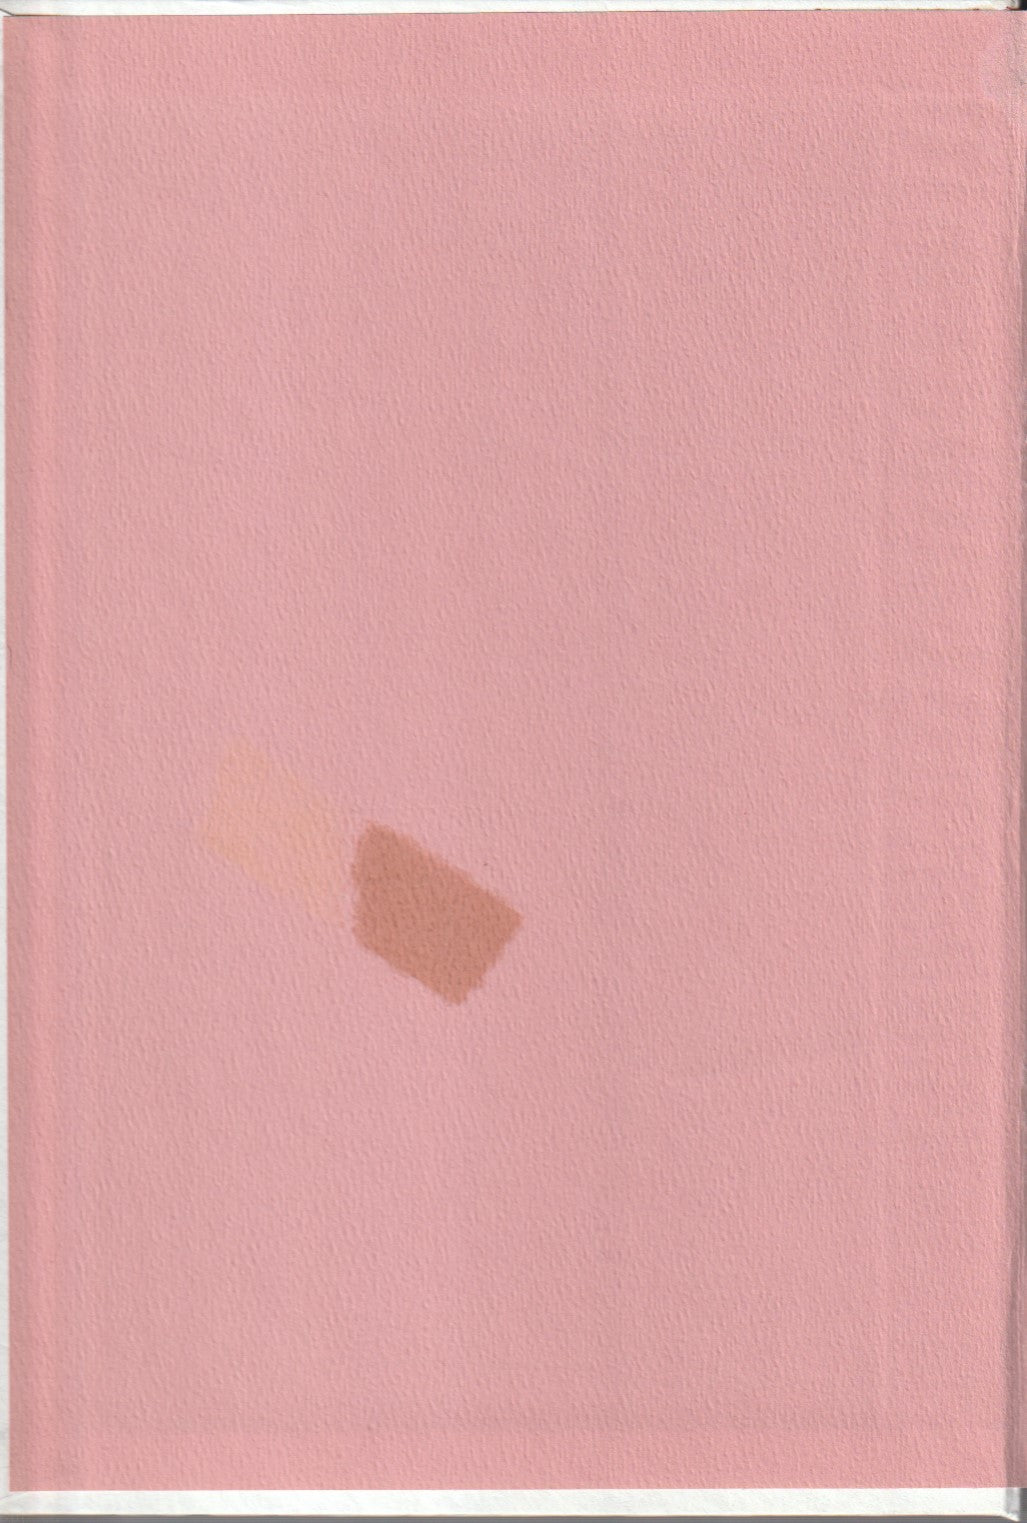 The Outsider 4/5 -- Pristine Hardcover Copy (1/500) with Ephemera